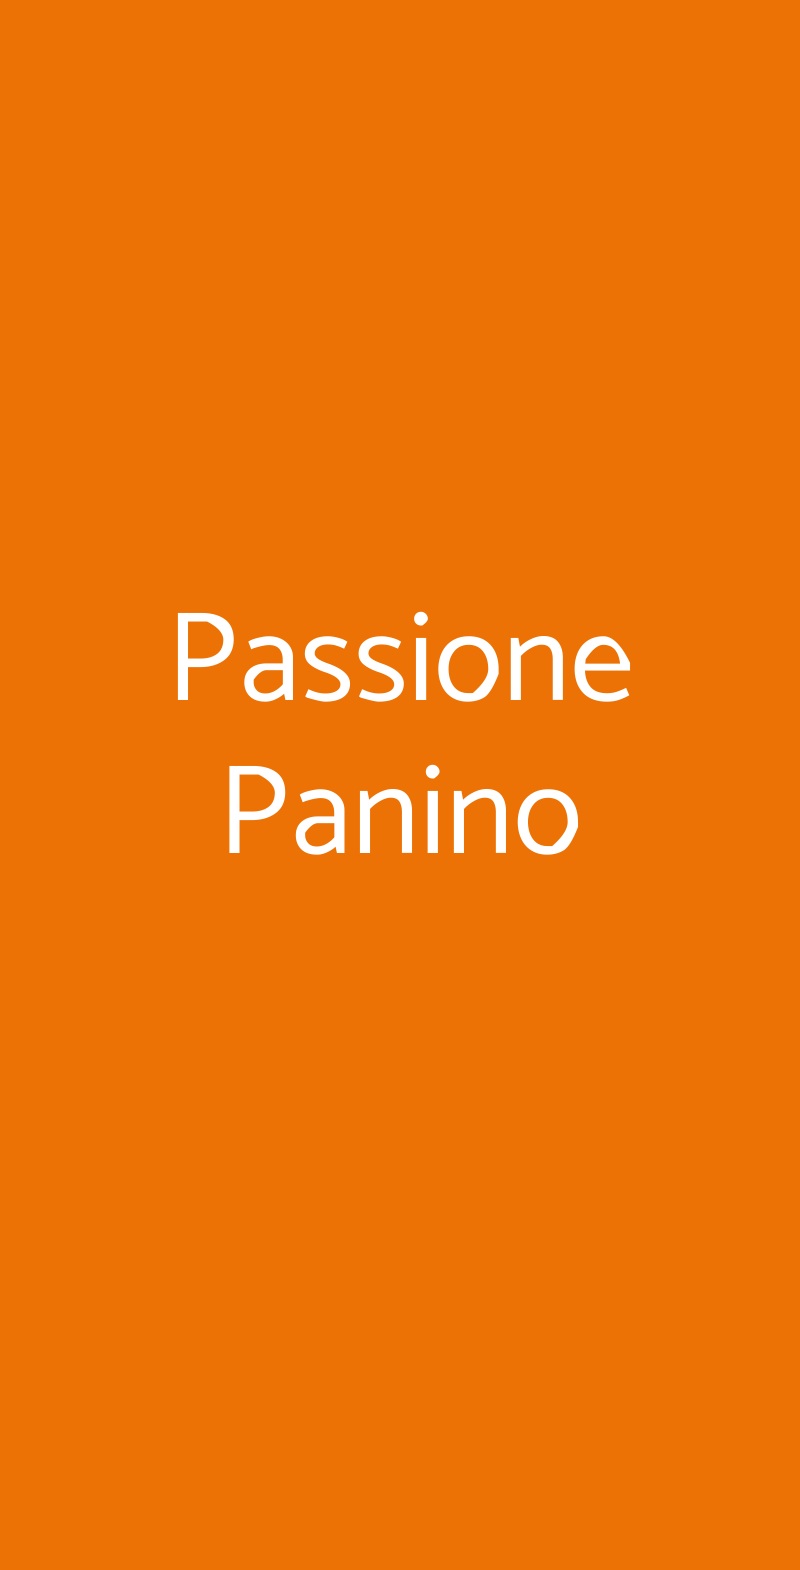 Passione Panino Torino menù 1 pagina